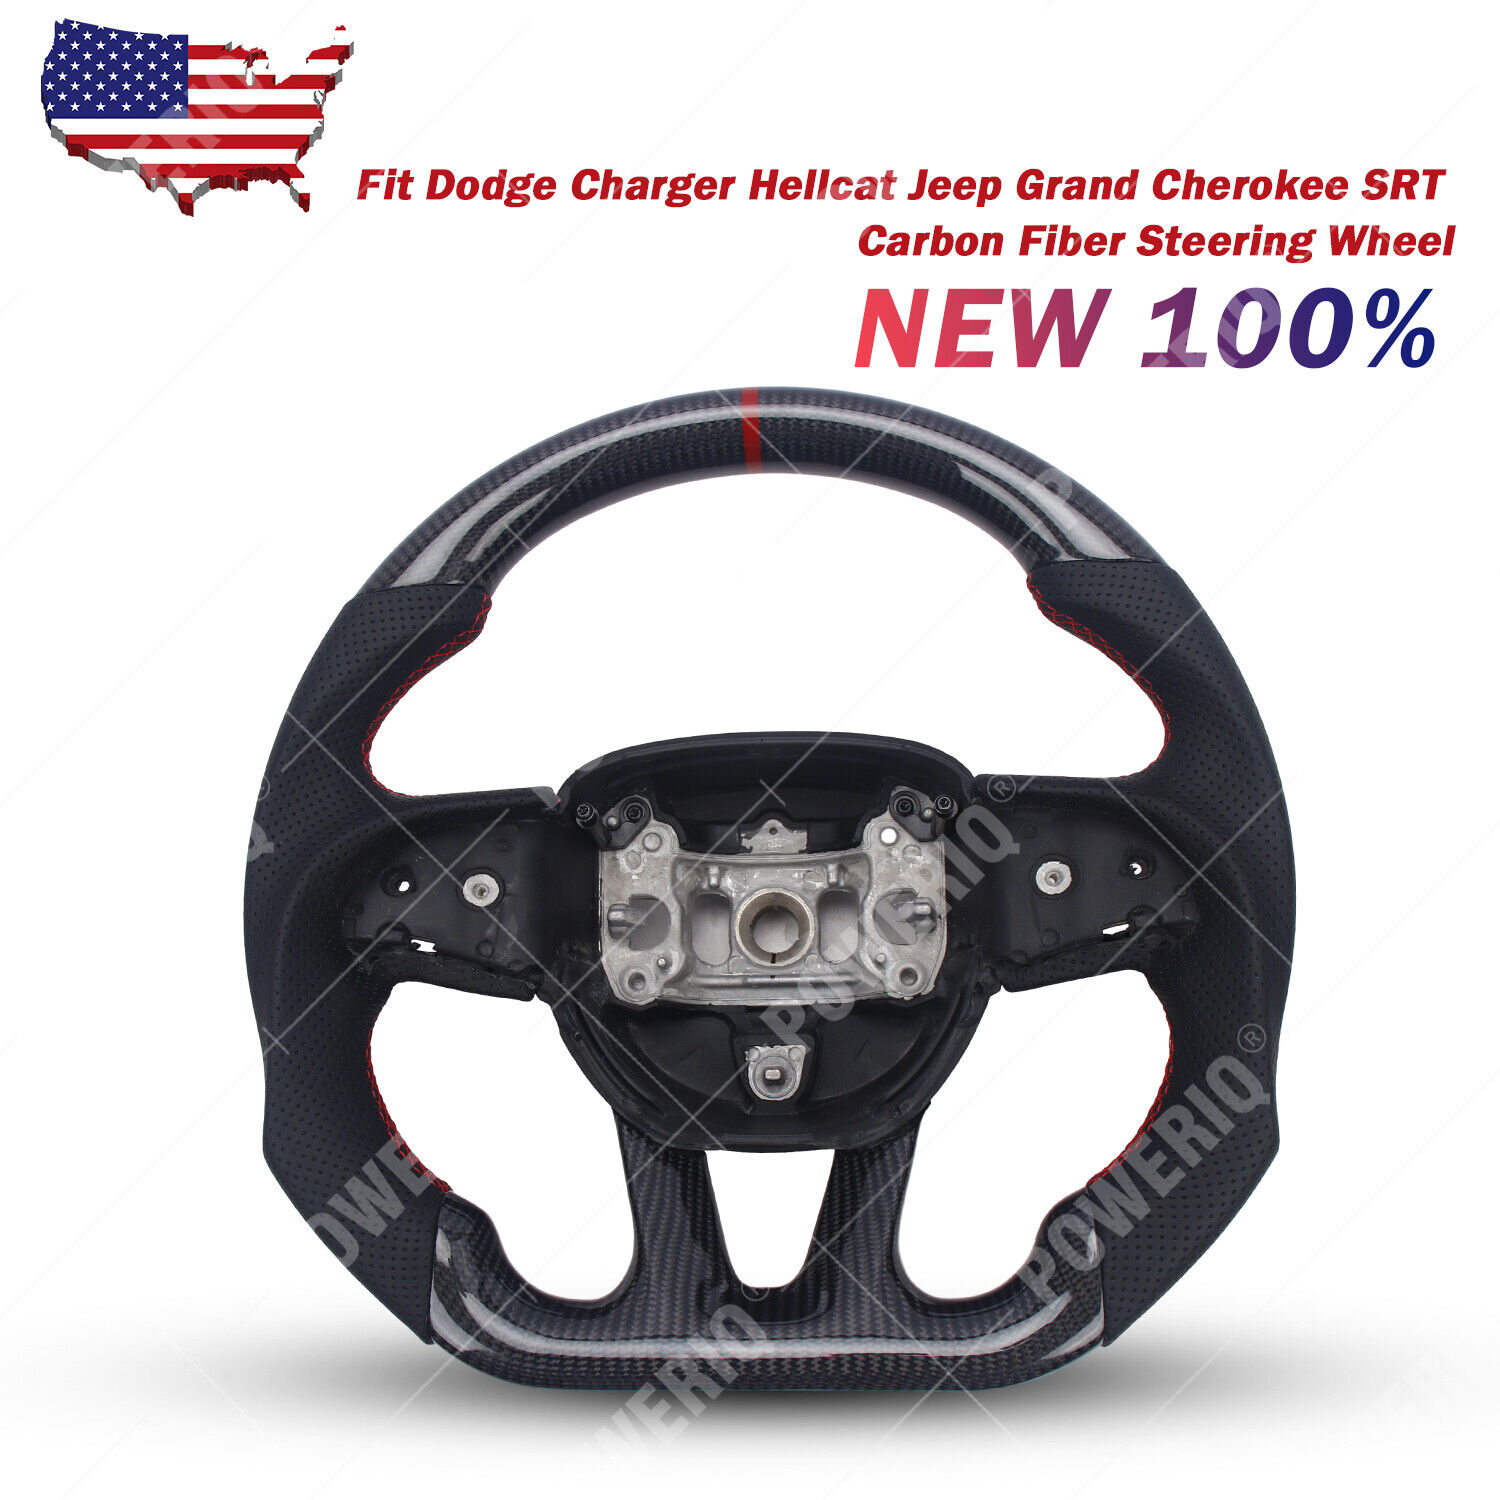 Fit Dodge Charger Hellcat Jeep Grand Cherokee SRT Carbon Fiber Steering Wheel us